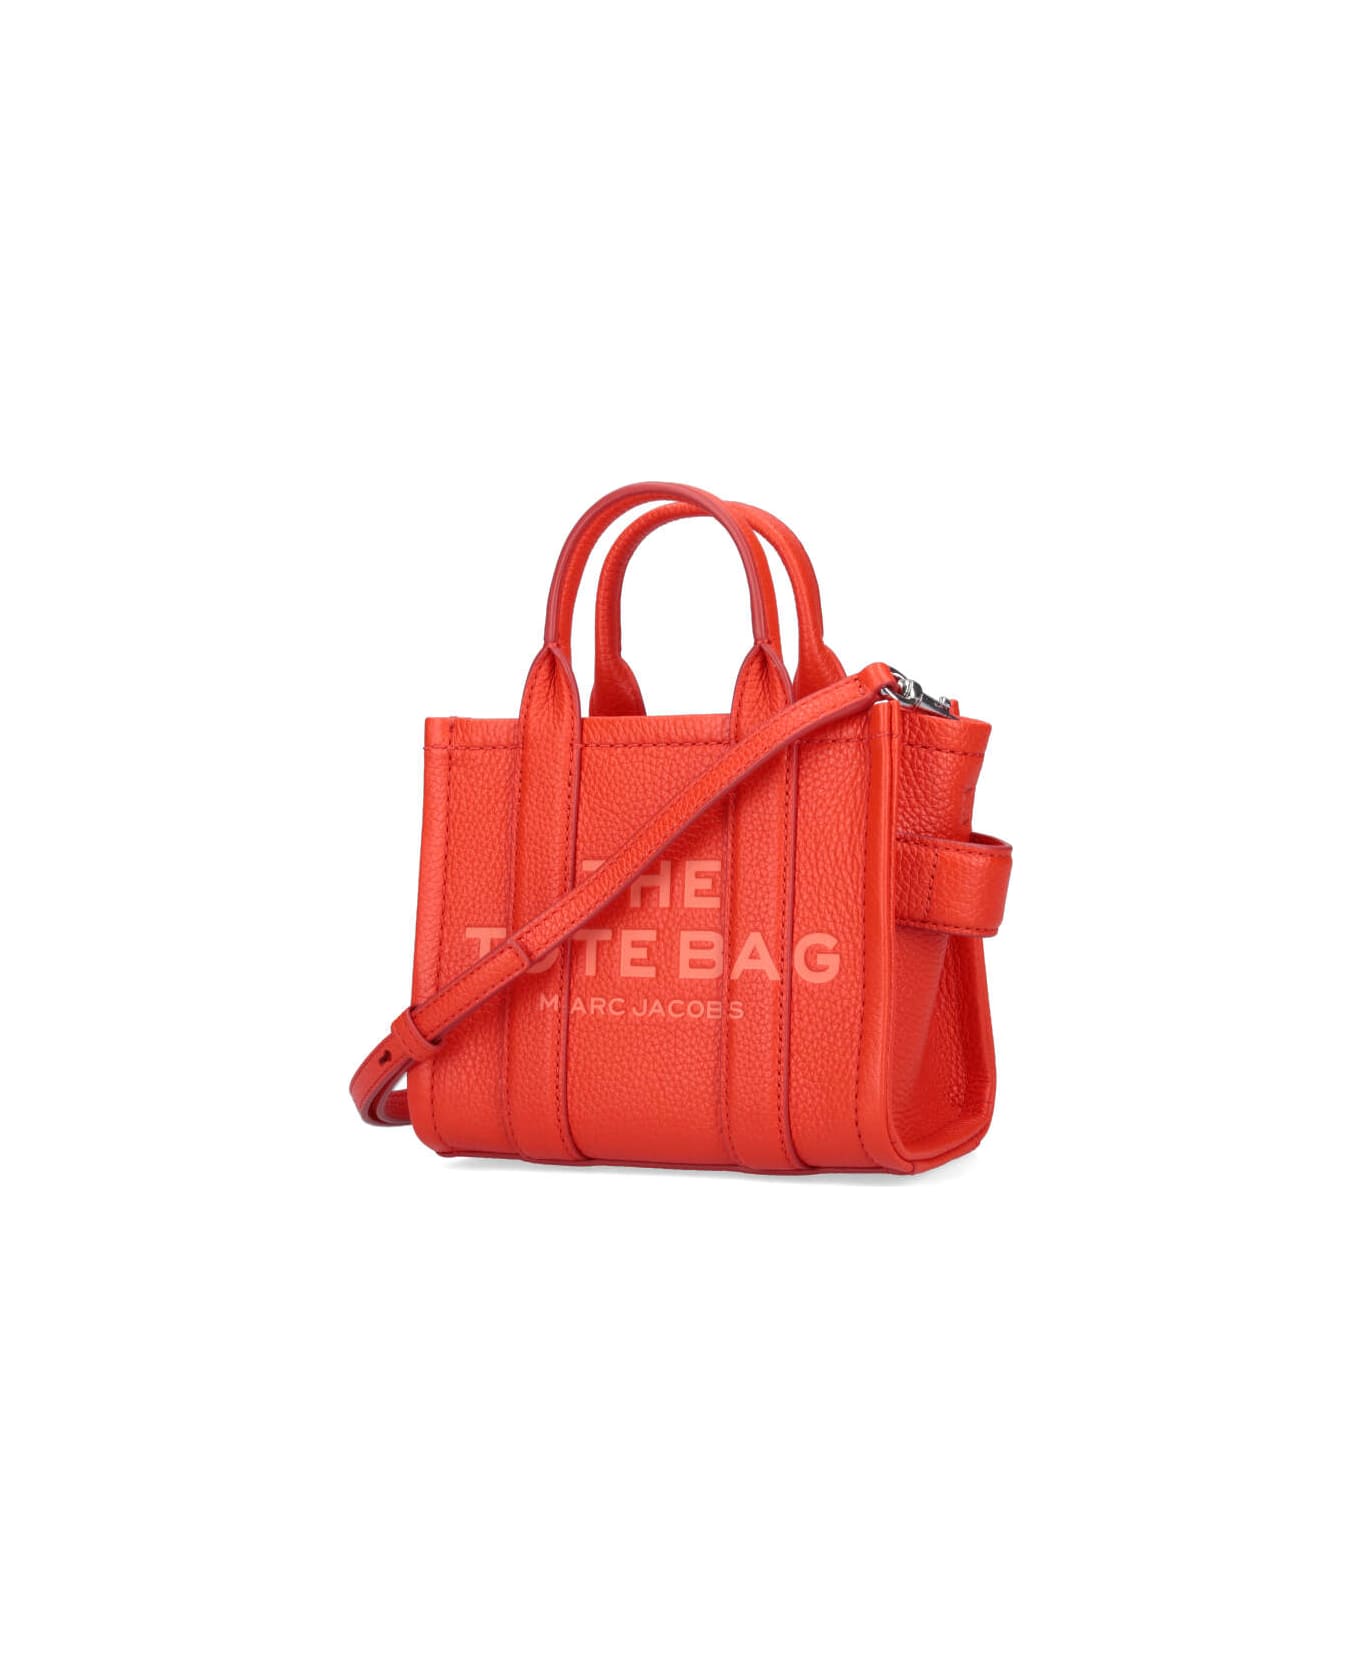 Marc Jacobs The Mini Tote Bag - Orange